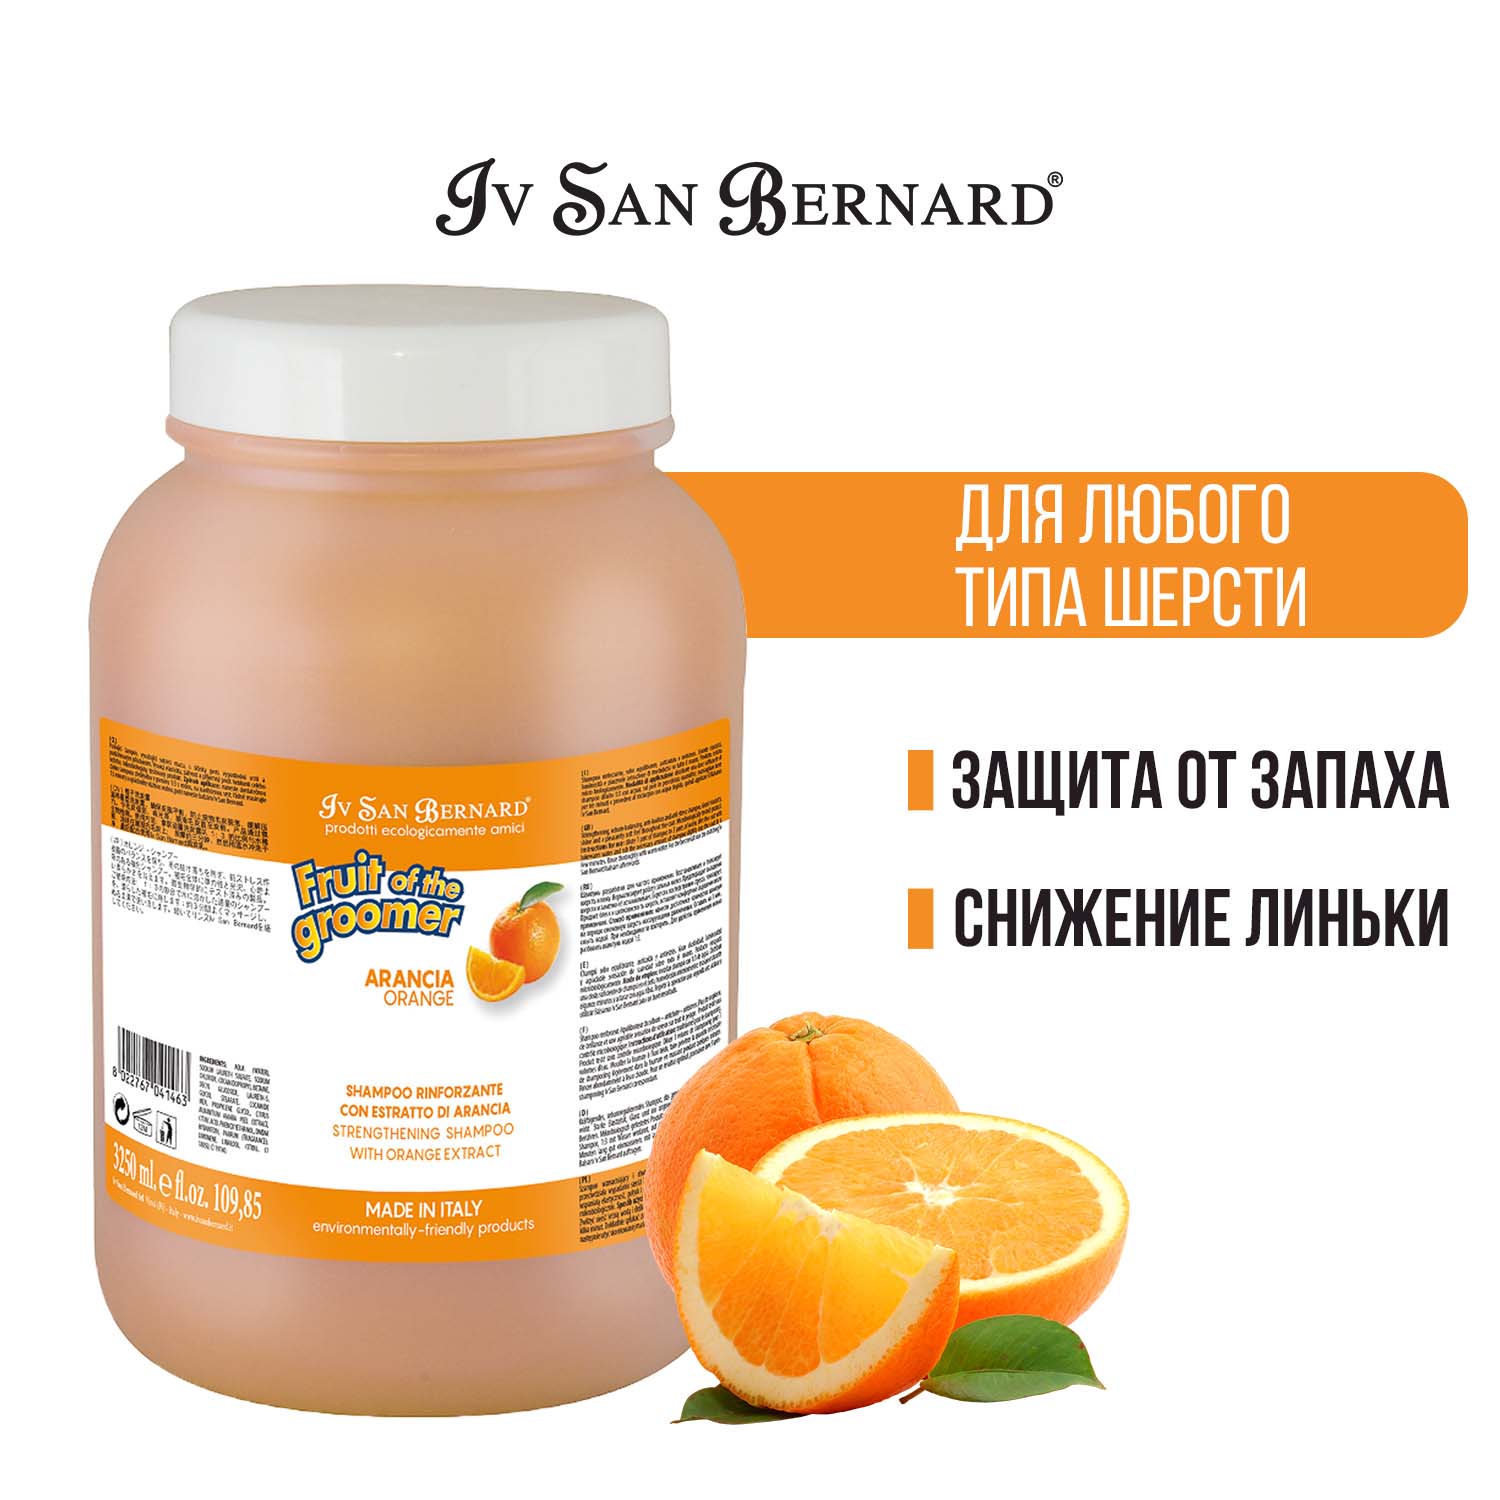 ISB Fruit of the Groomer Orange Шампунь для слабой выпадающей шерсти 3,25 л